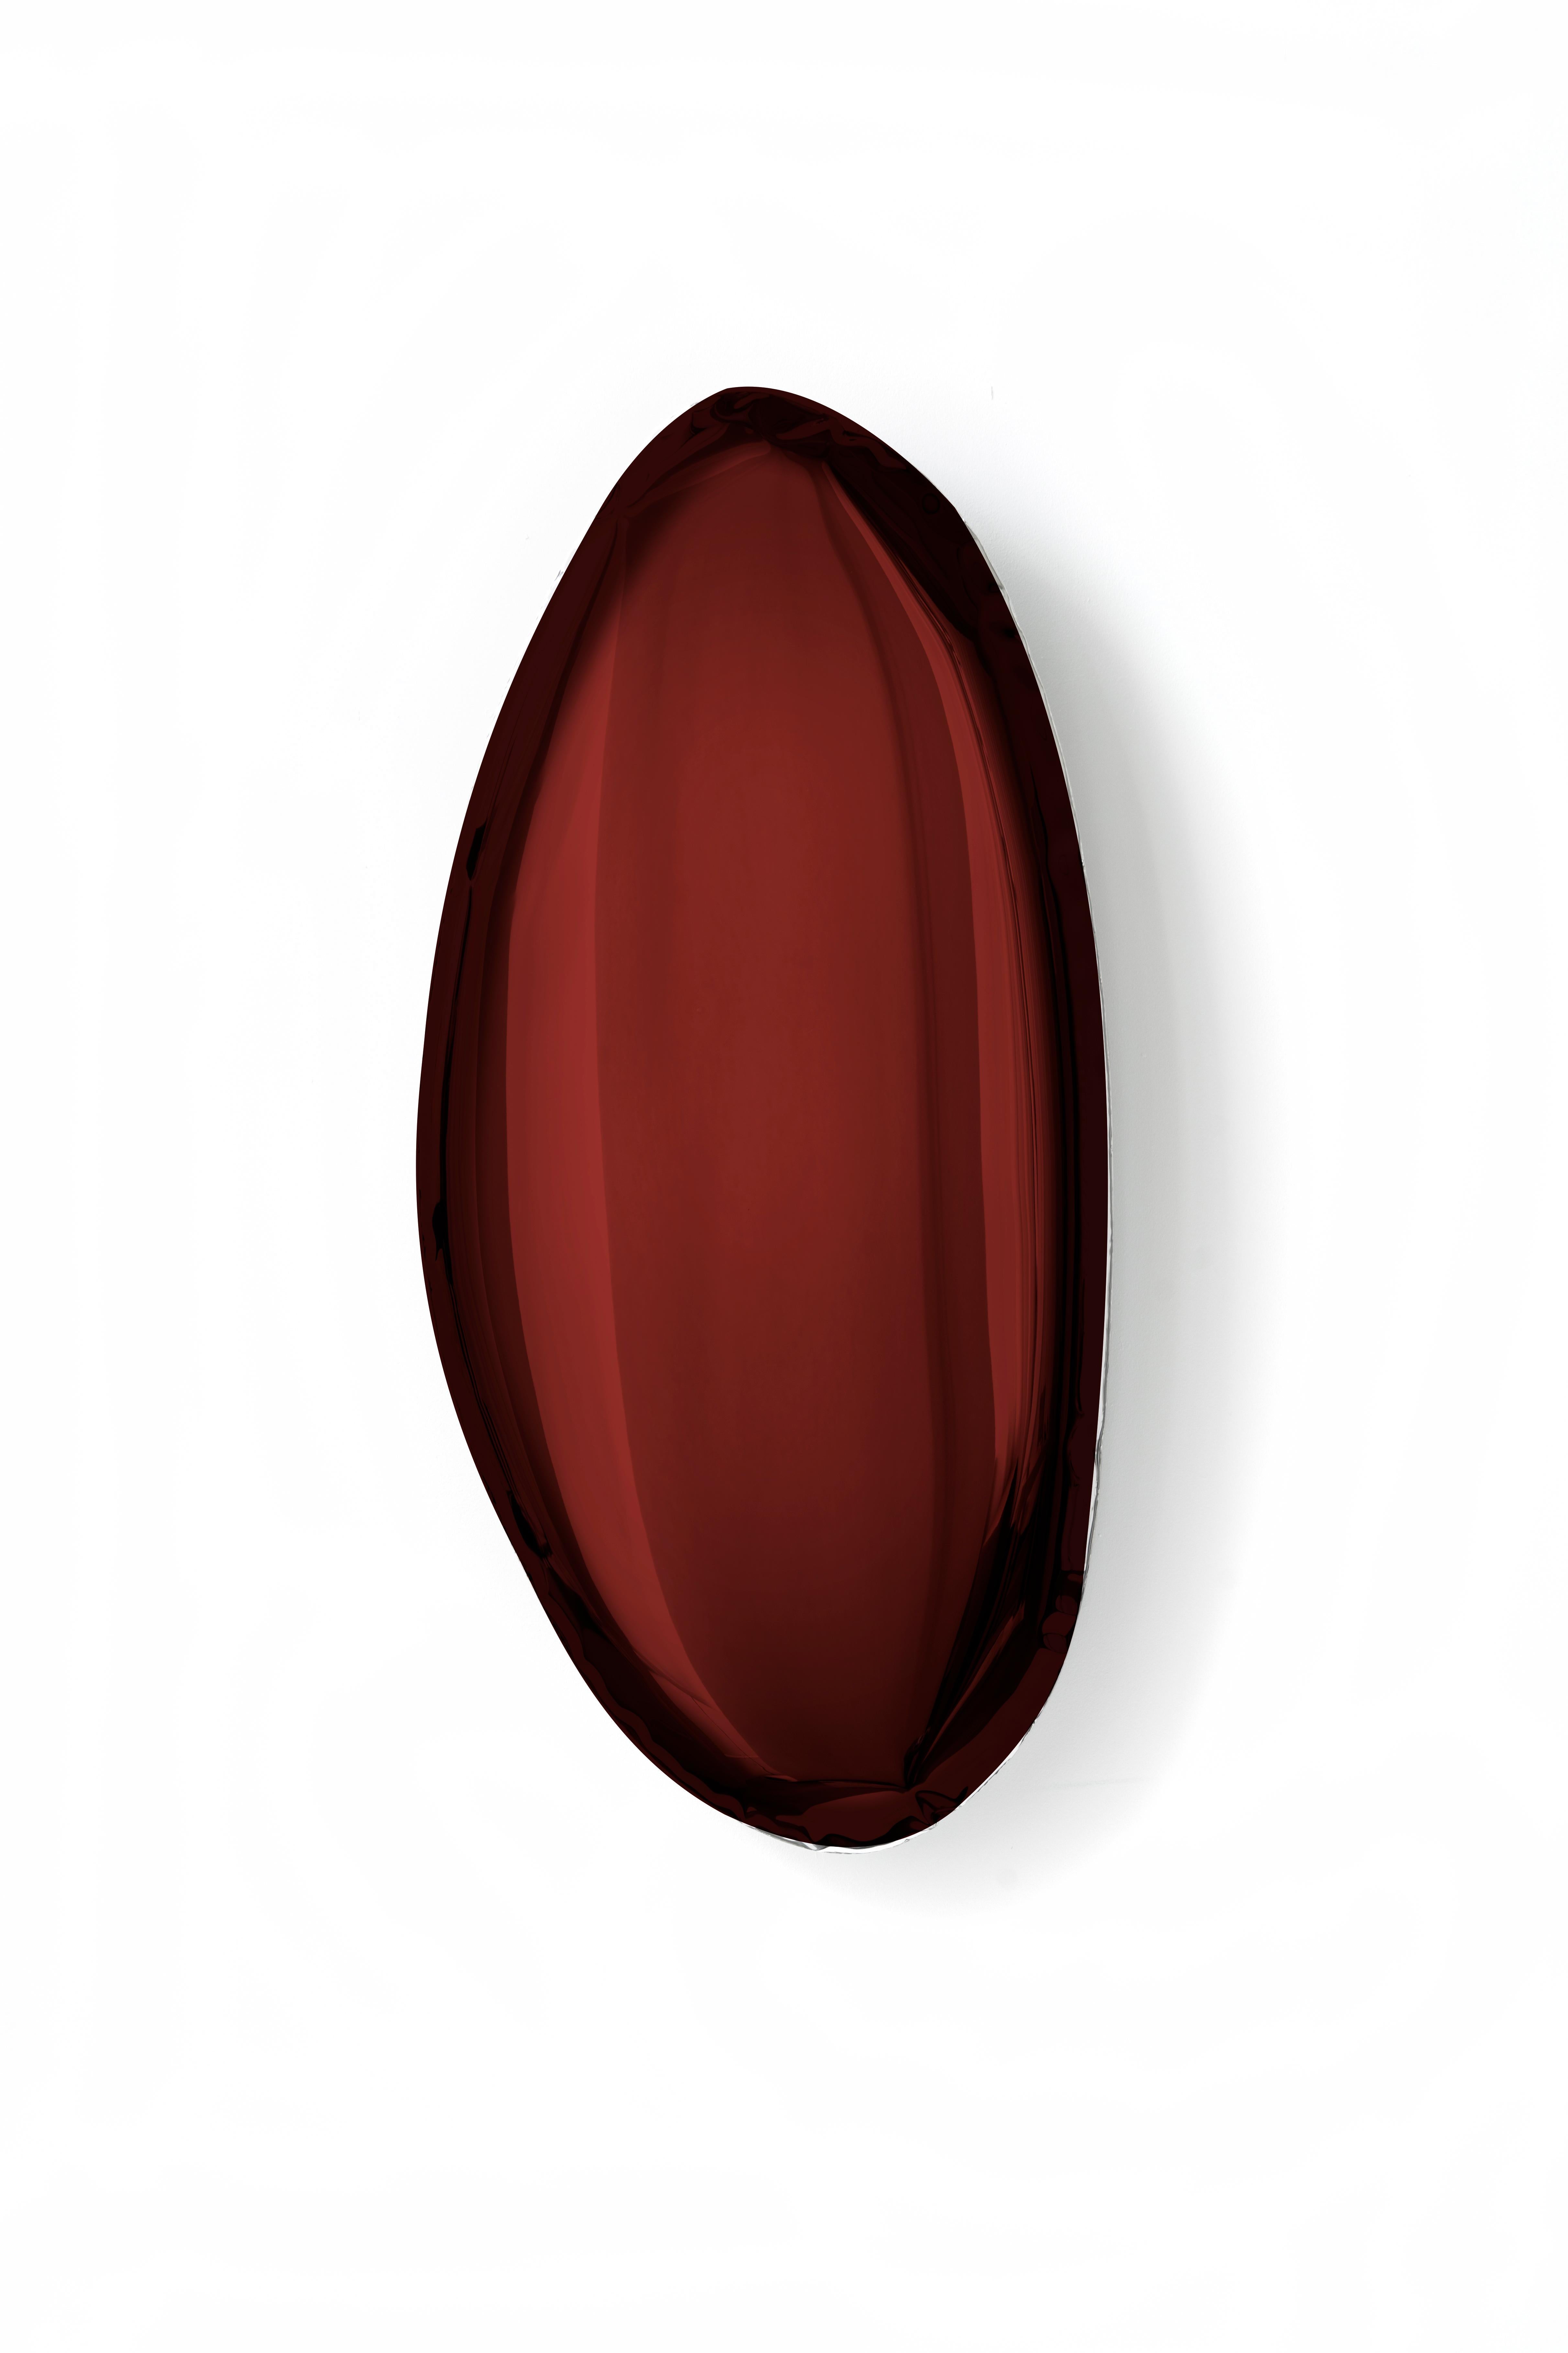 Minimalist Mirror Tafla O6 Rubin Red, in Polished Stainless Steel by Zieta For Sale